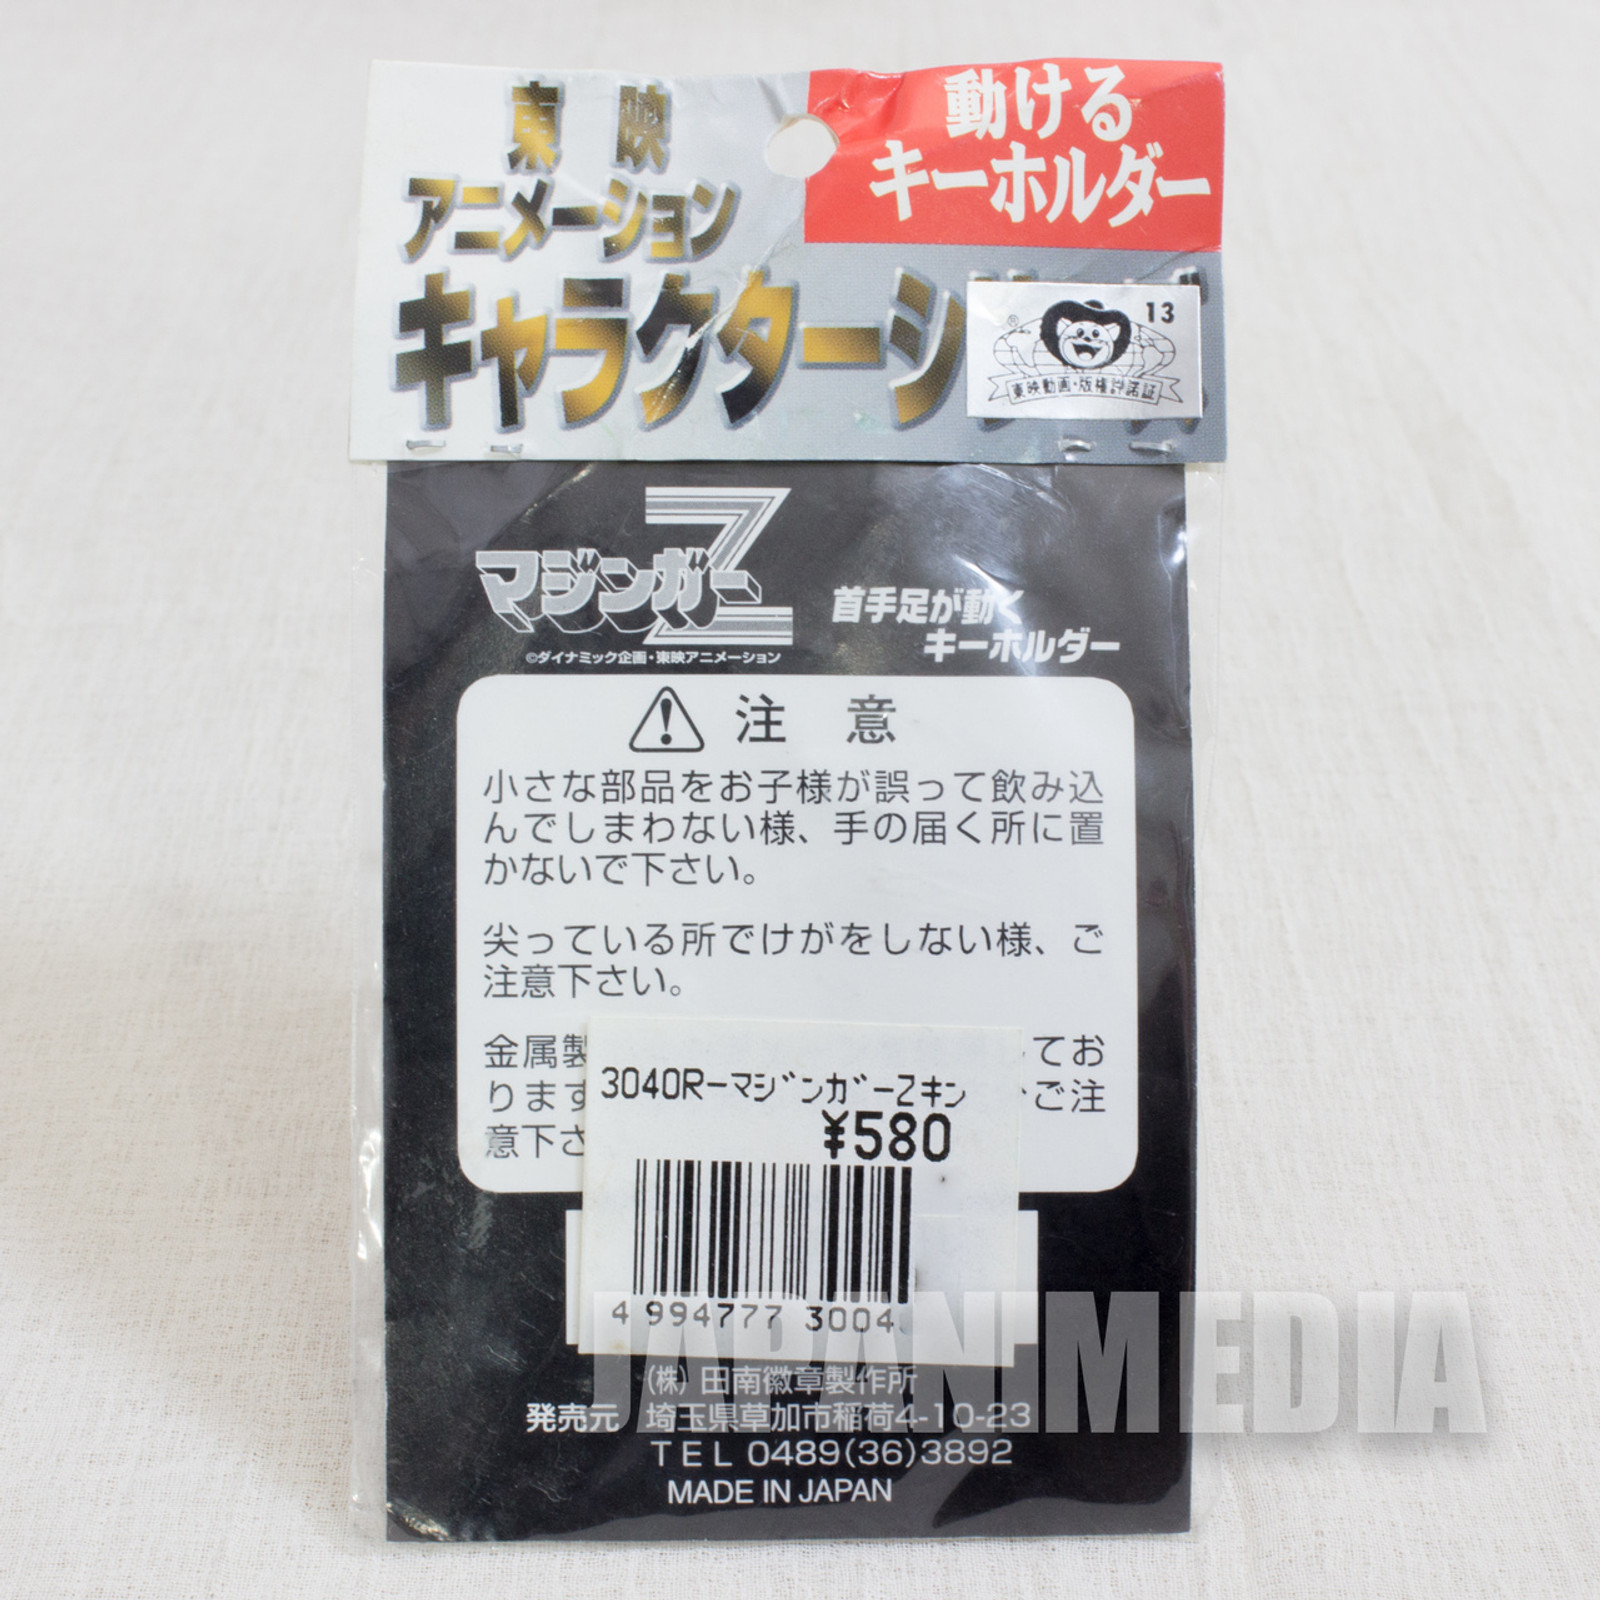 Retro Rare! Mazinger Z Action Key chain JAPAN ANIME MANGA